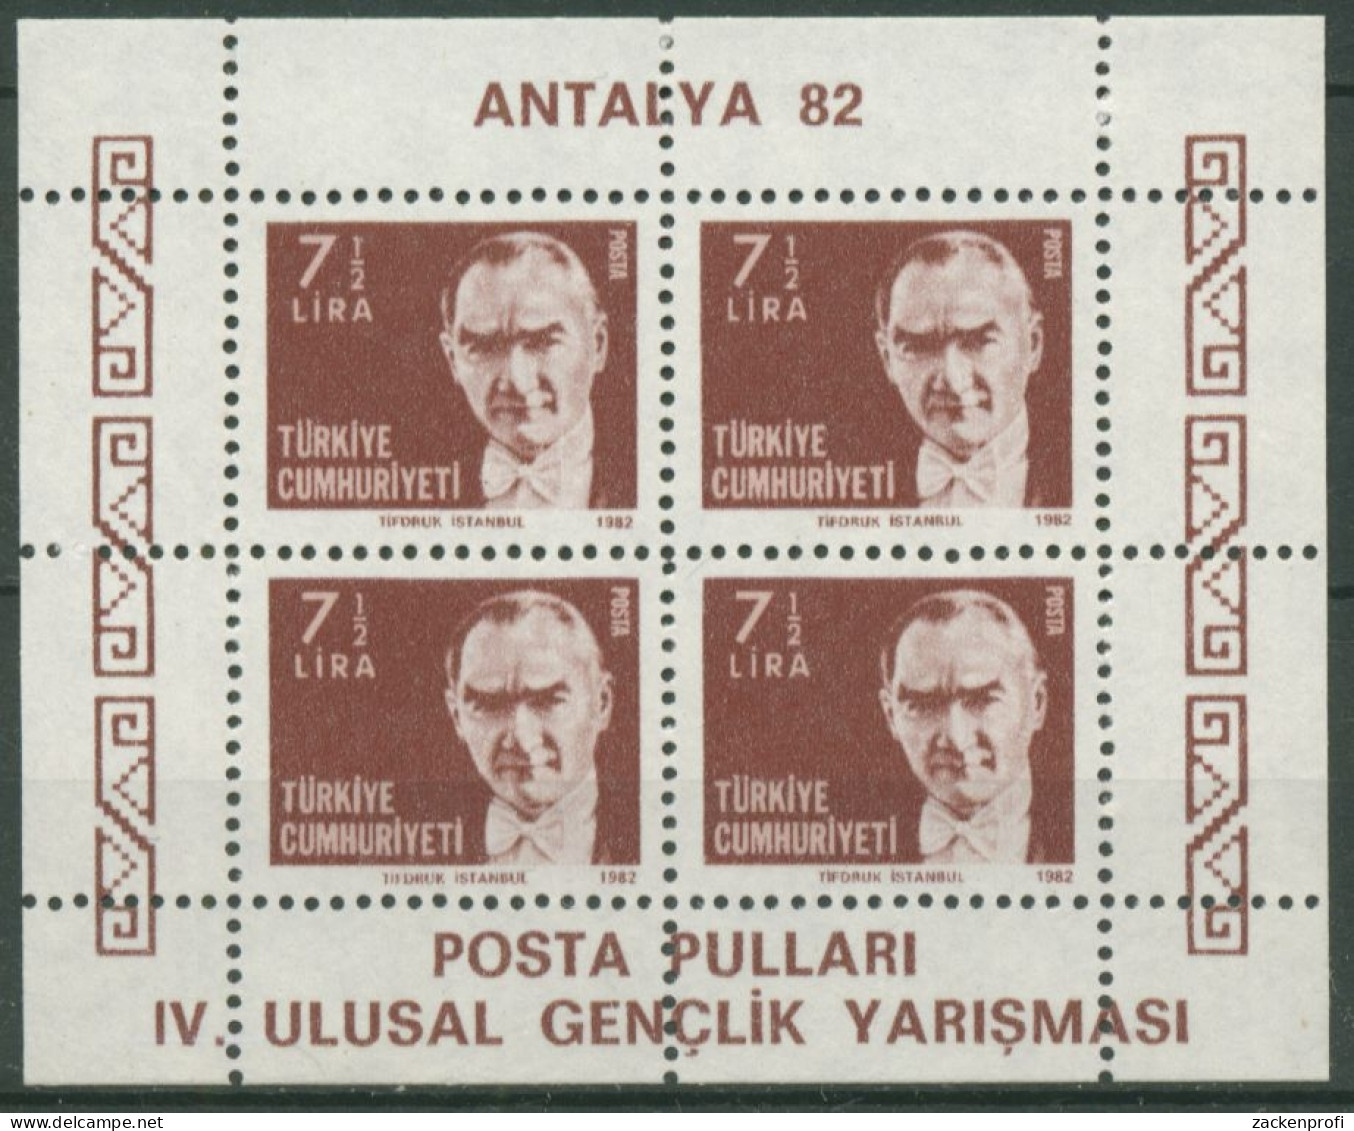 Türkei 1982 Jugend-Briefmarkenausstellung ANATLYA Block 22 A Postfrisch (C6712) - Blocs-feuillets